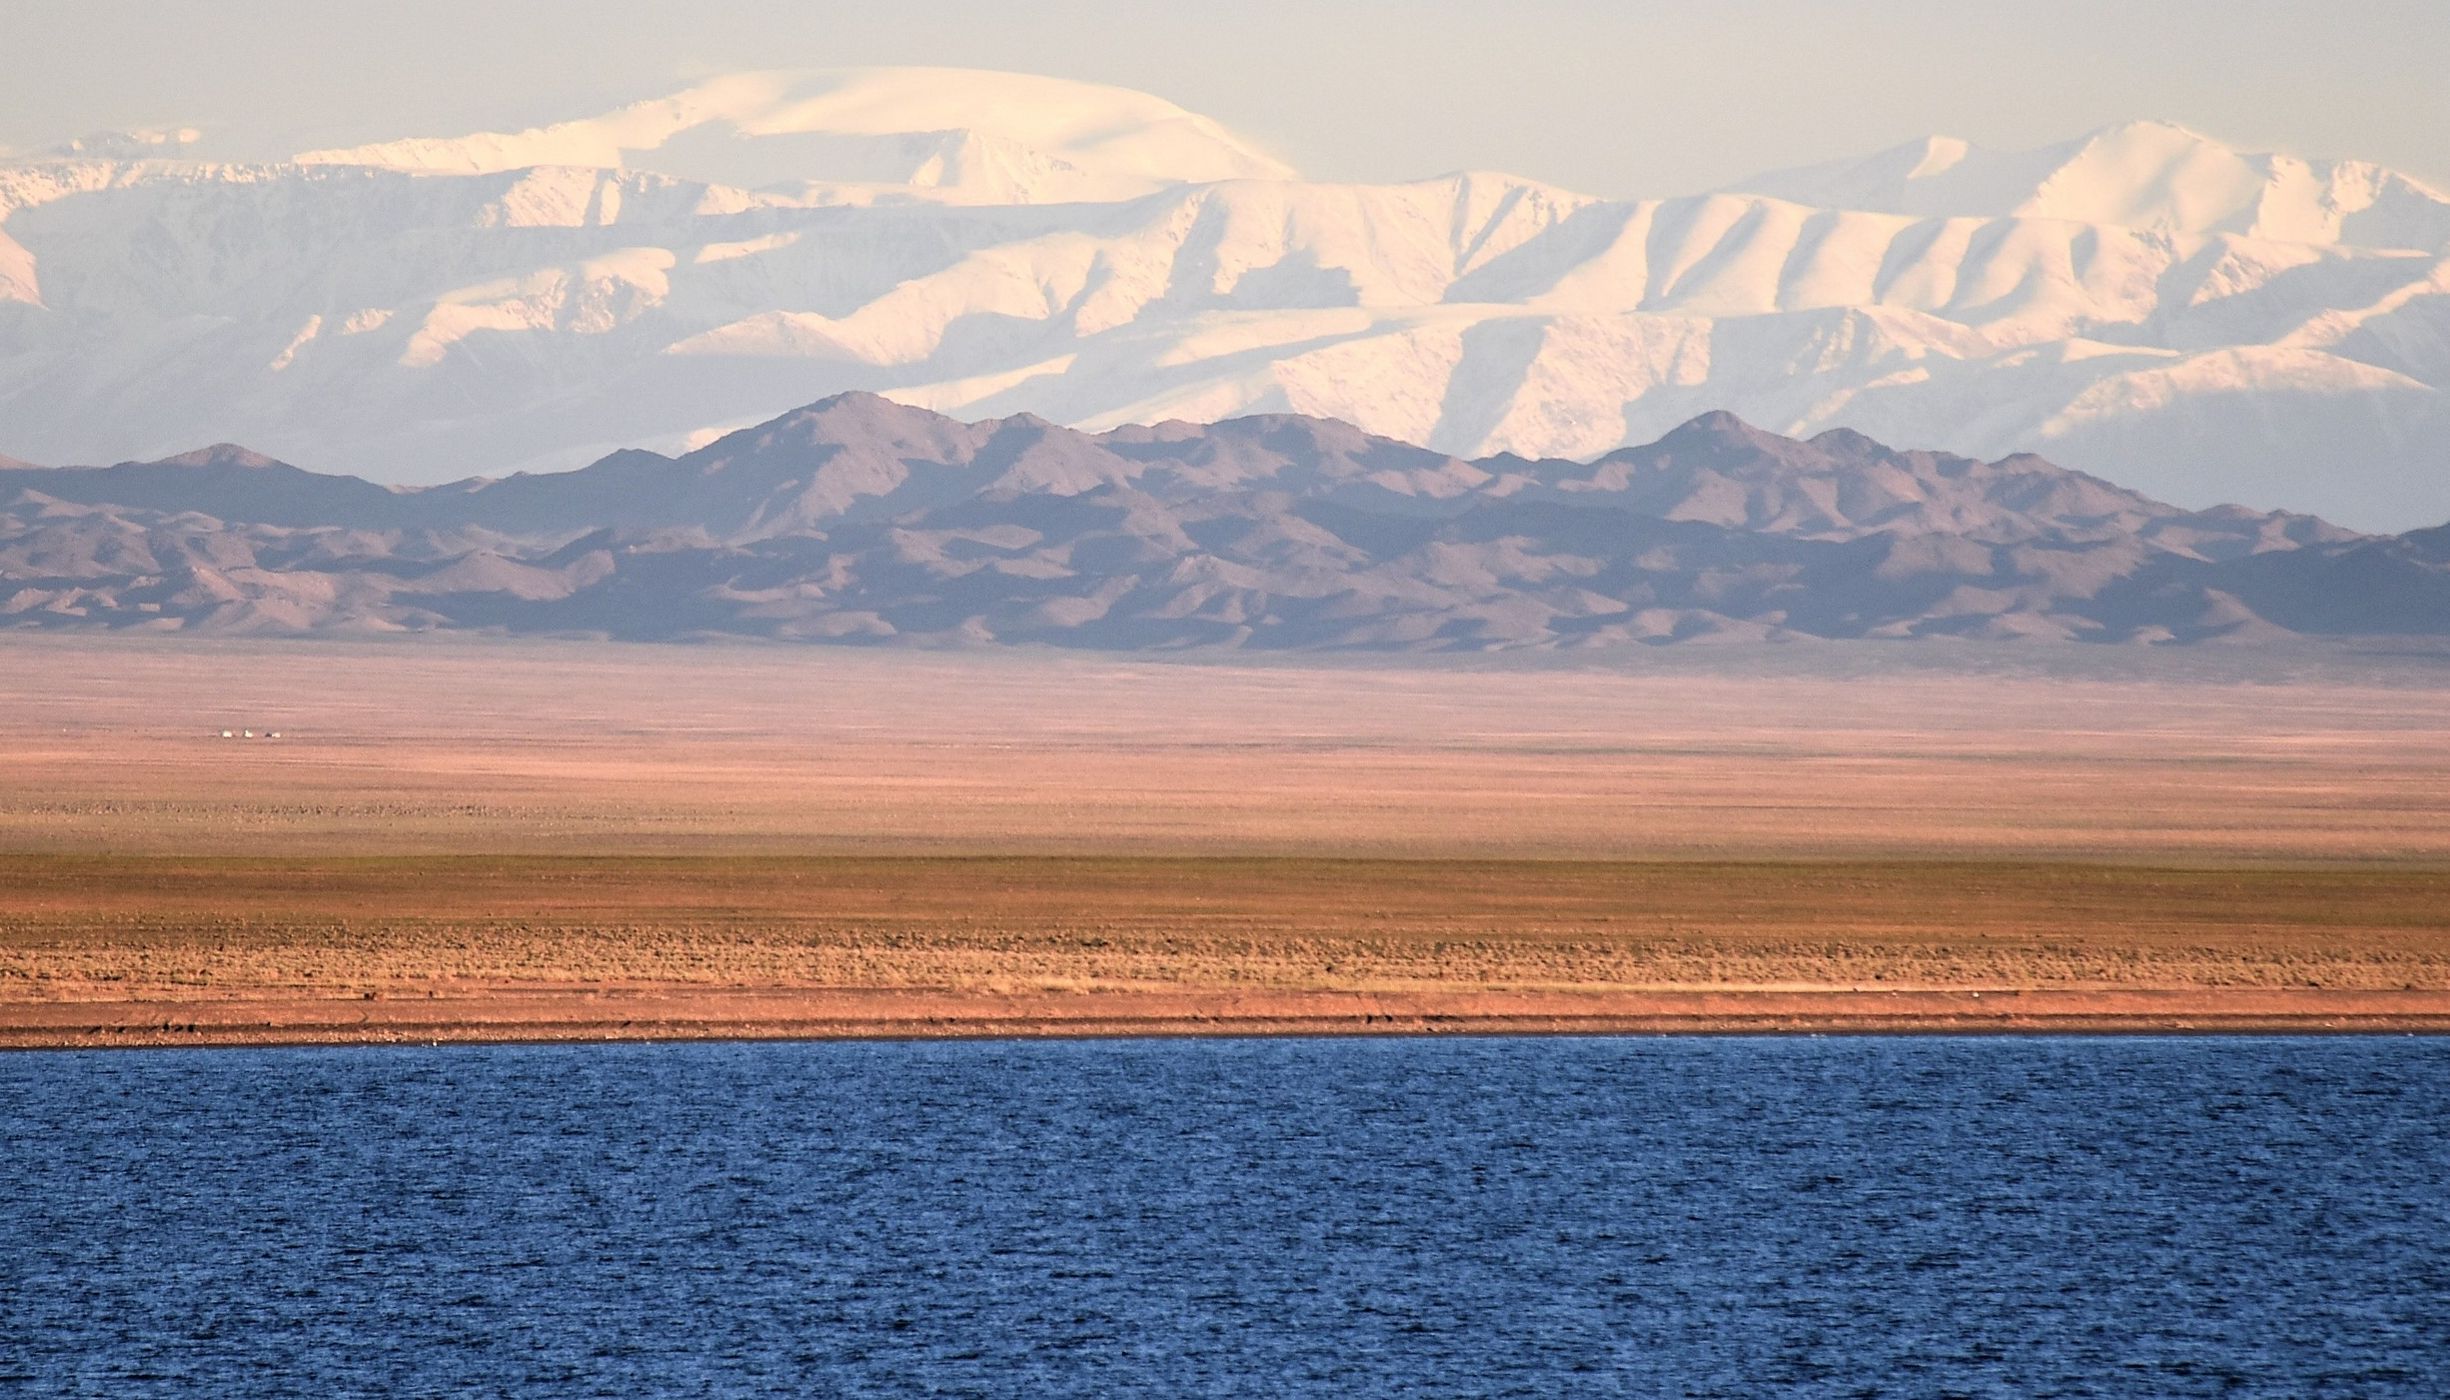 A beautiful landscape of Mongolia